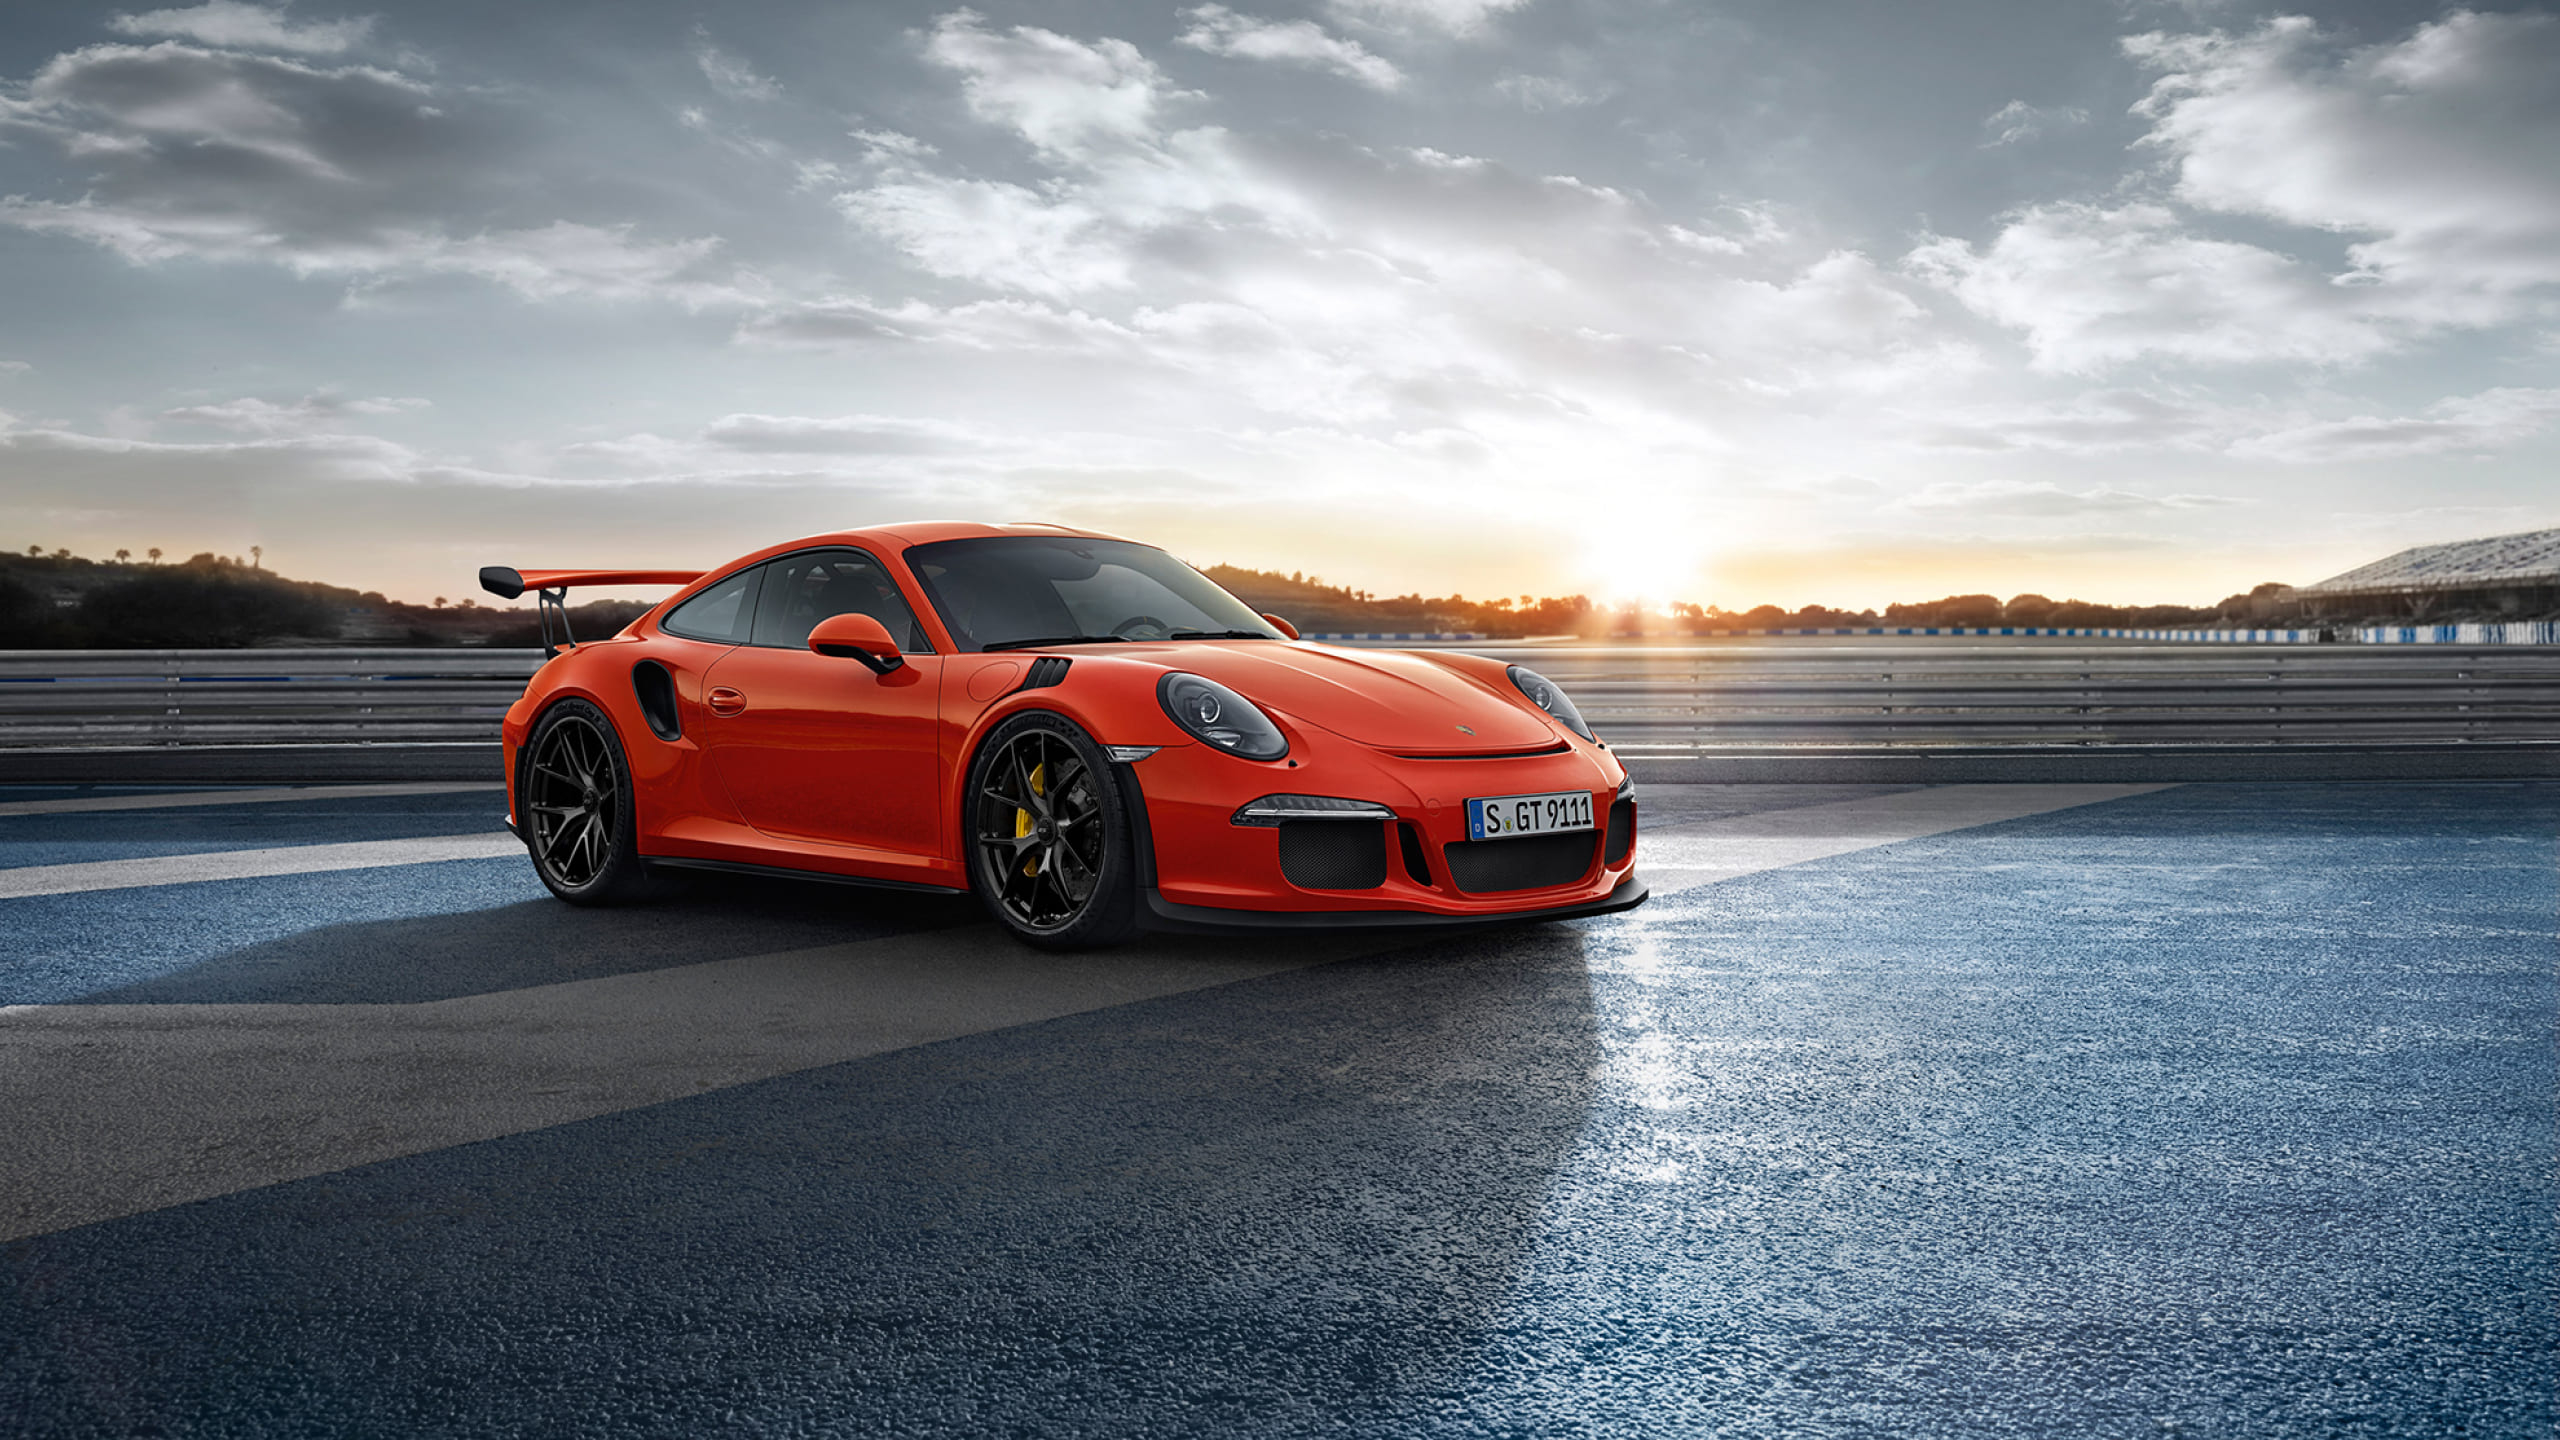 2560x1440 Porsche 911 GT3 Wallpapers ; Top Free Porsche 911 GT3 Backgrounds, Pictures \u0026 Images Download